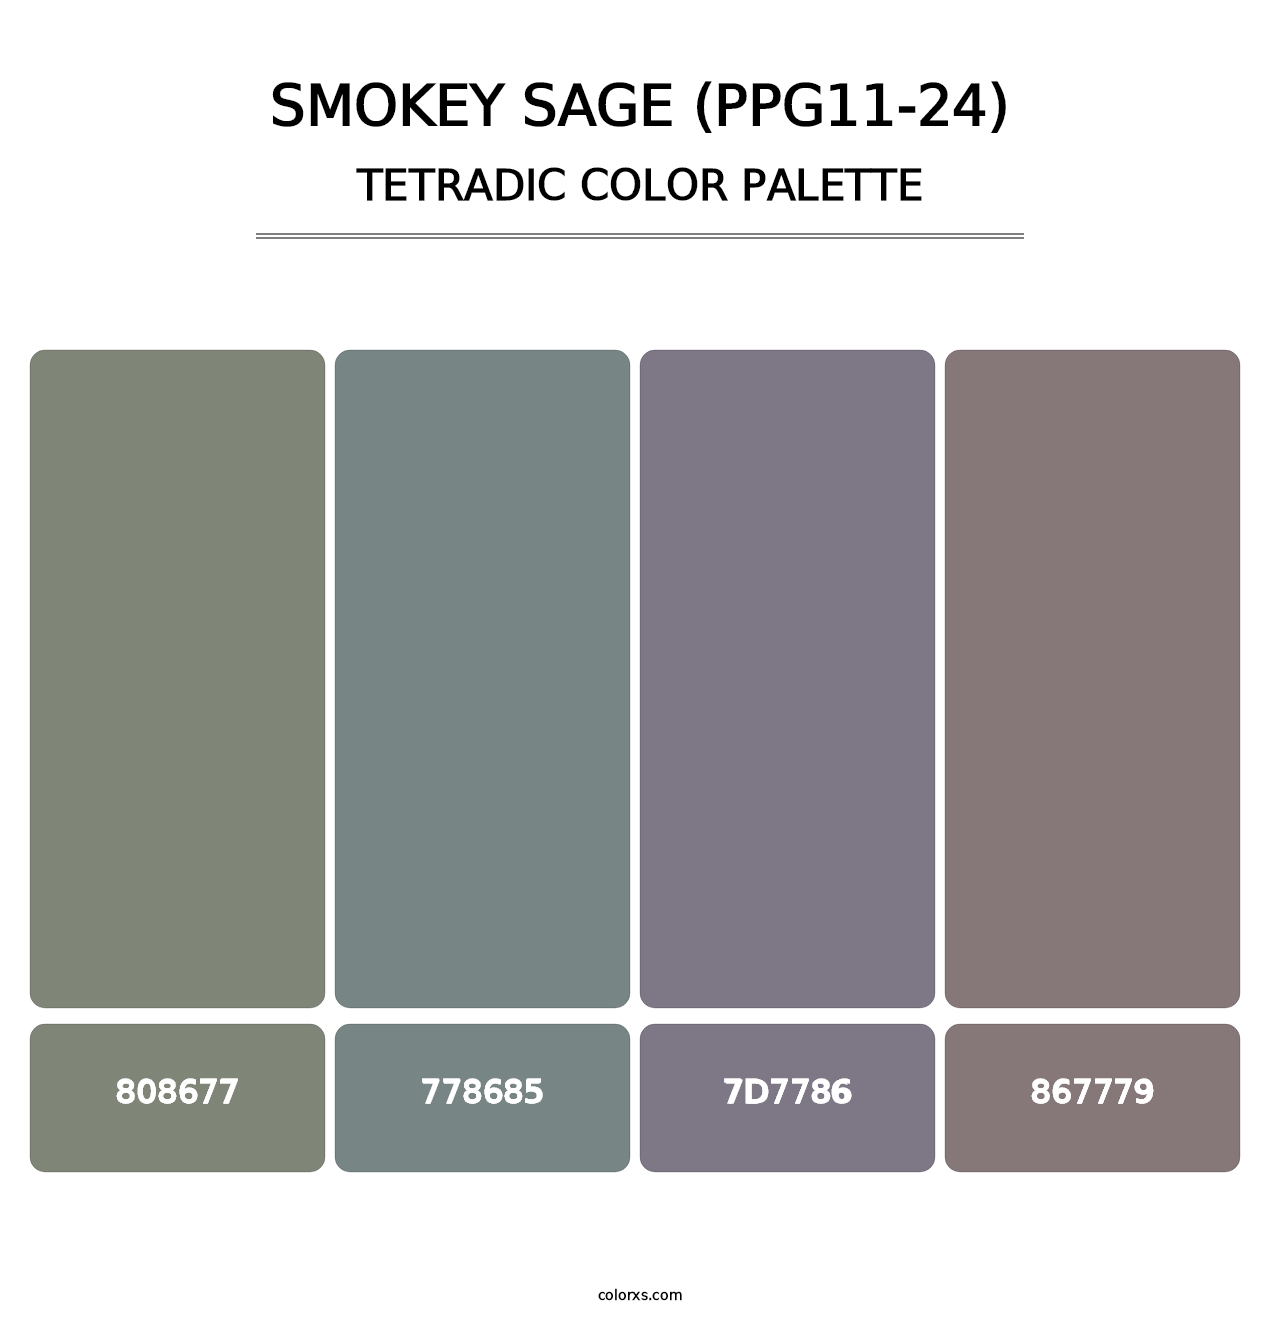 Smokey Sage (PPG11-24) - Tetradic Color Palette